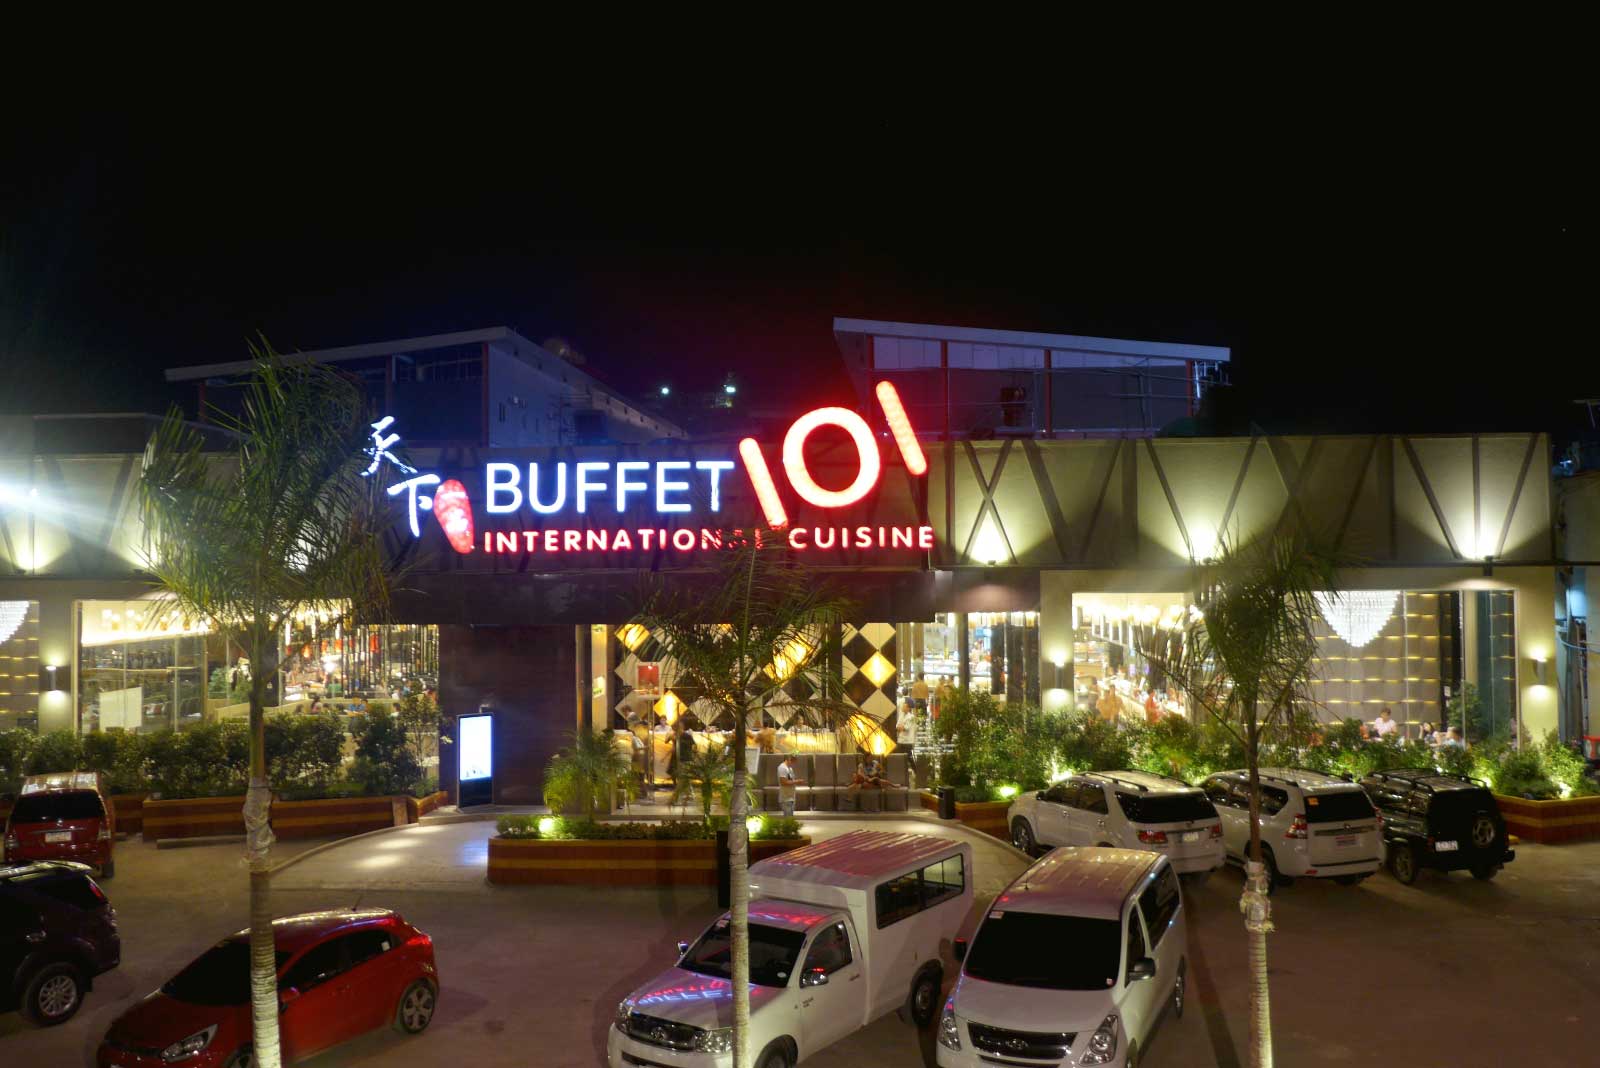 Buffet 101 Cebu offers allyoucaneat dining in hotel setting